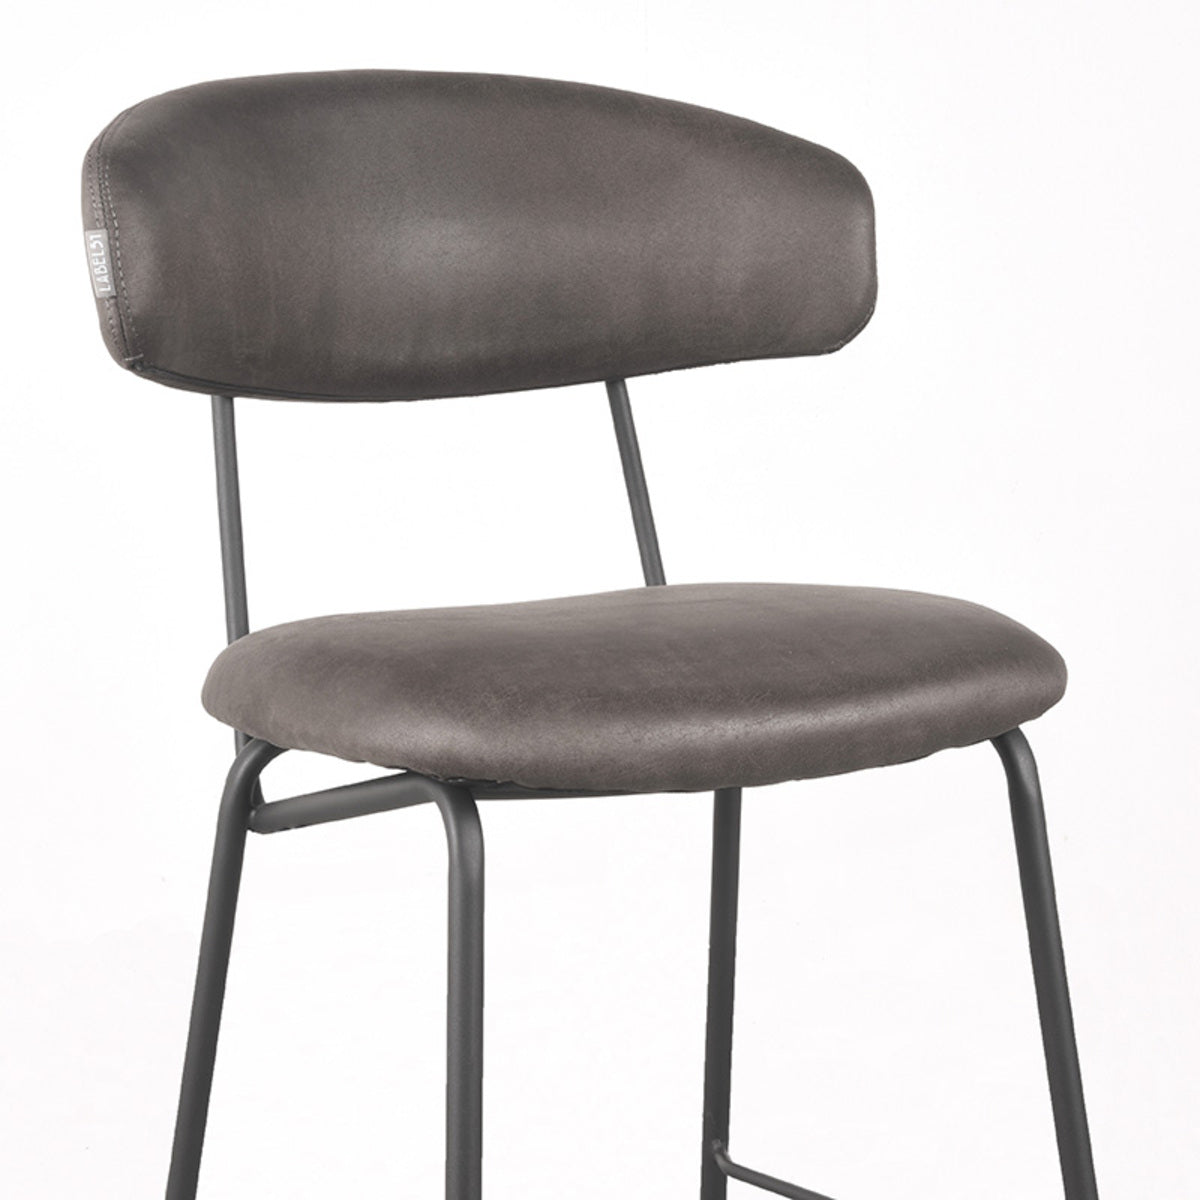 LABEL51 Bar stool Zack - Anthracite - Microfiber - Seat height 65